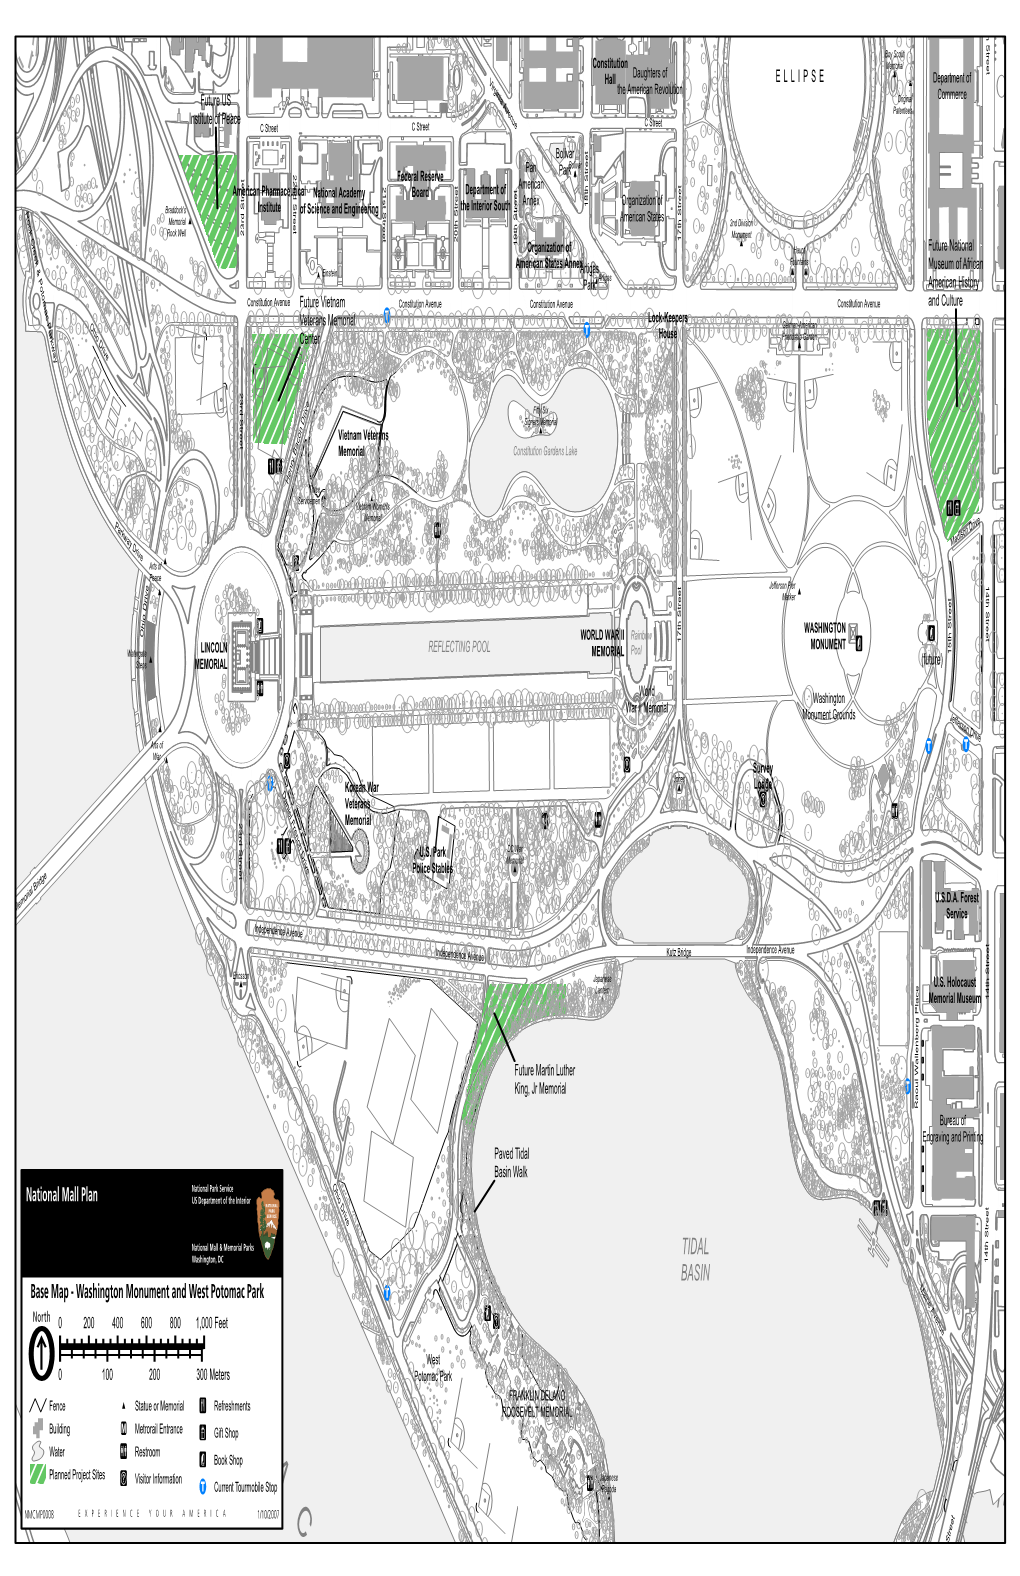 National Mall Plan, Base